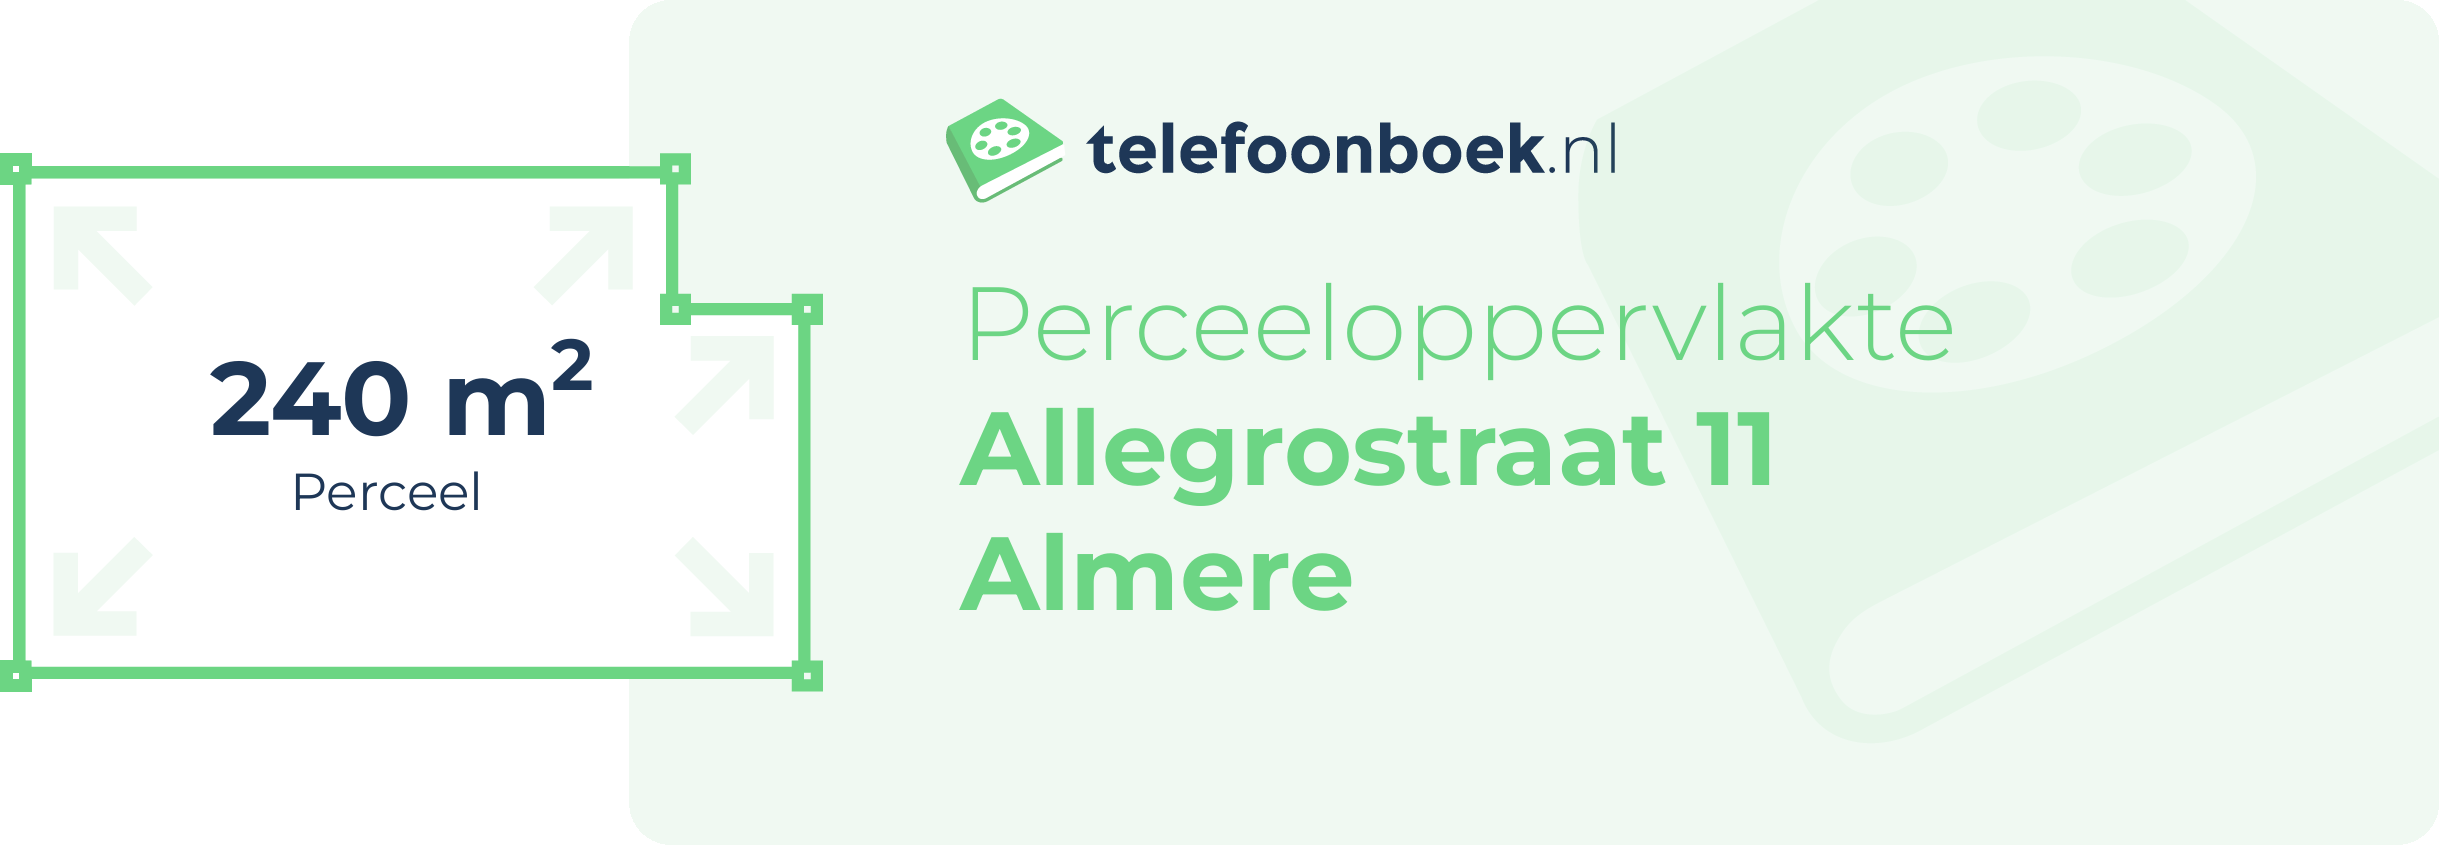 Perceeloppervlakte Allegrostraat 11 Almere